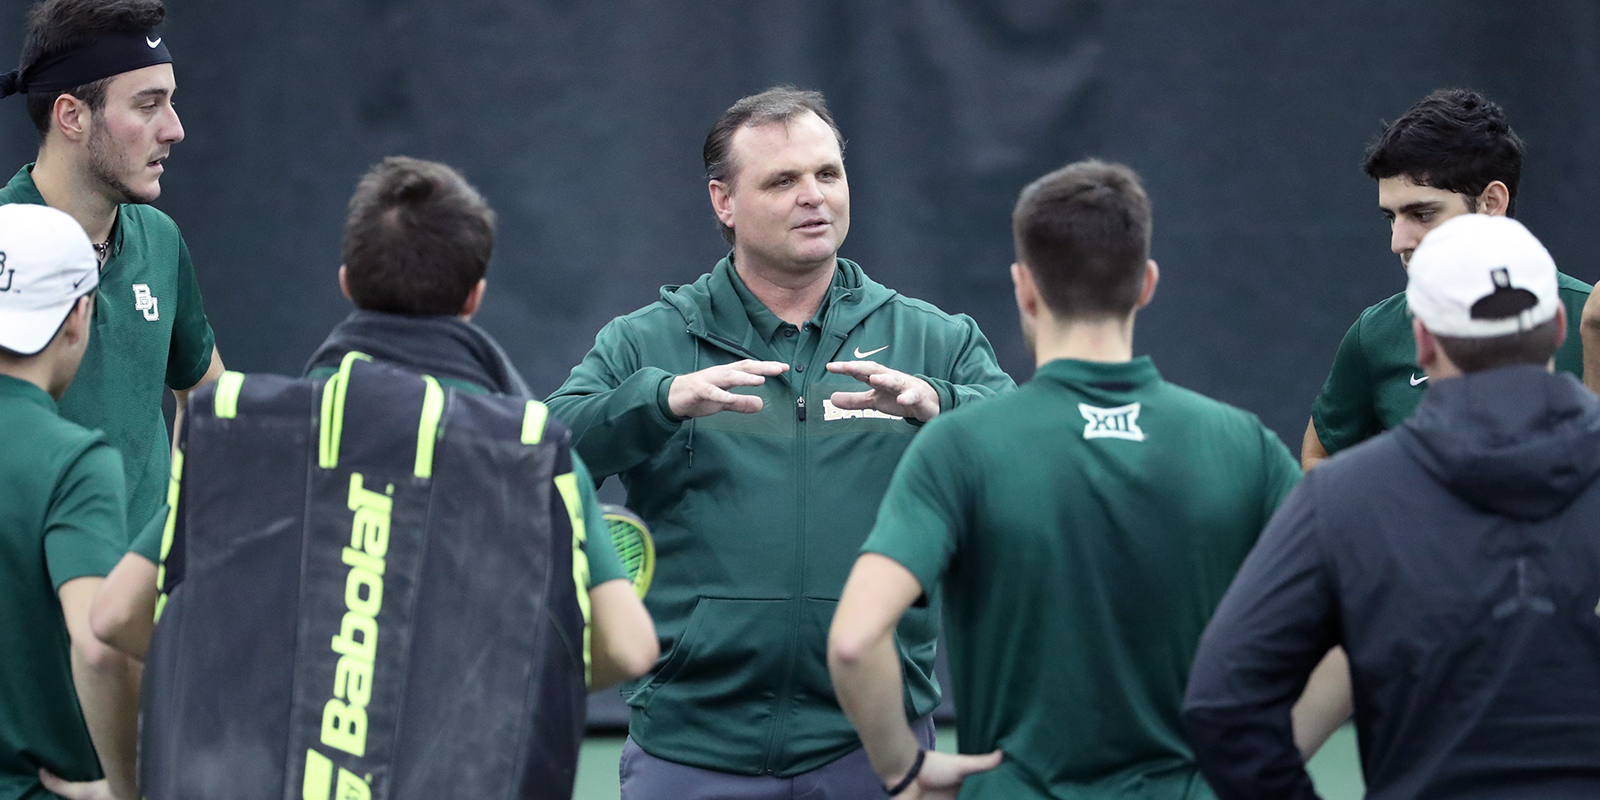 Head coach Brian Boland talks to the Baylor men's tennis team